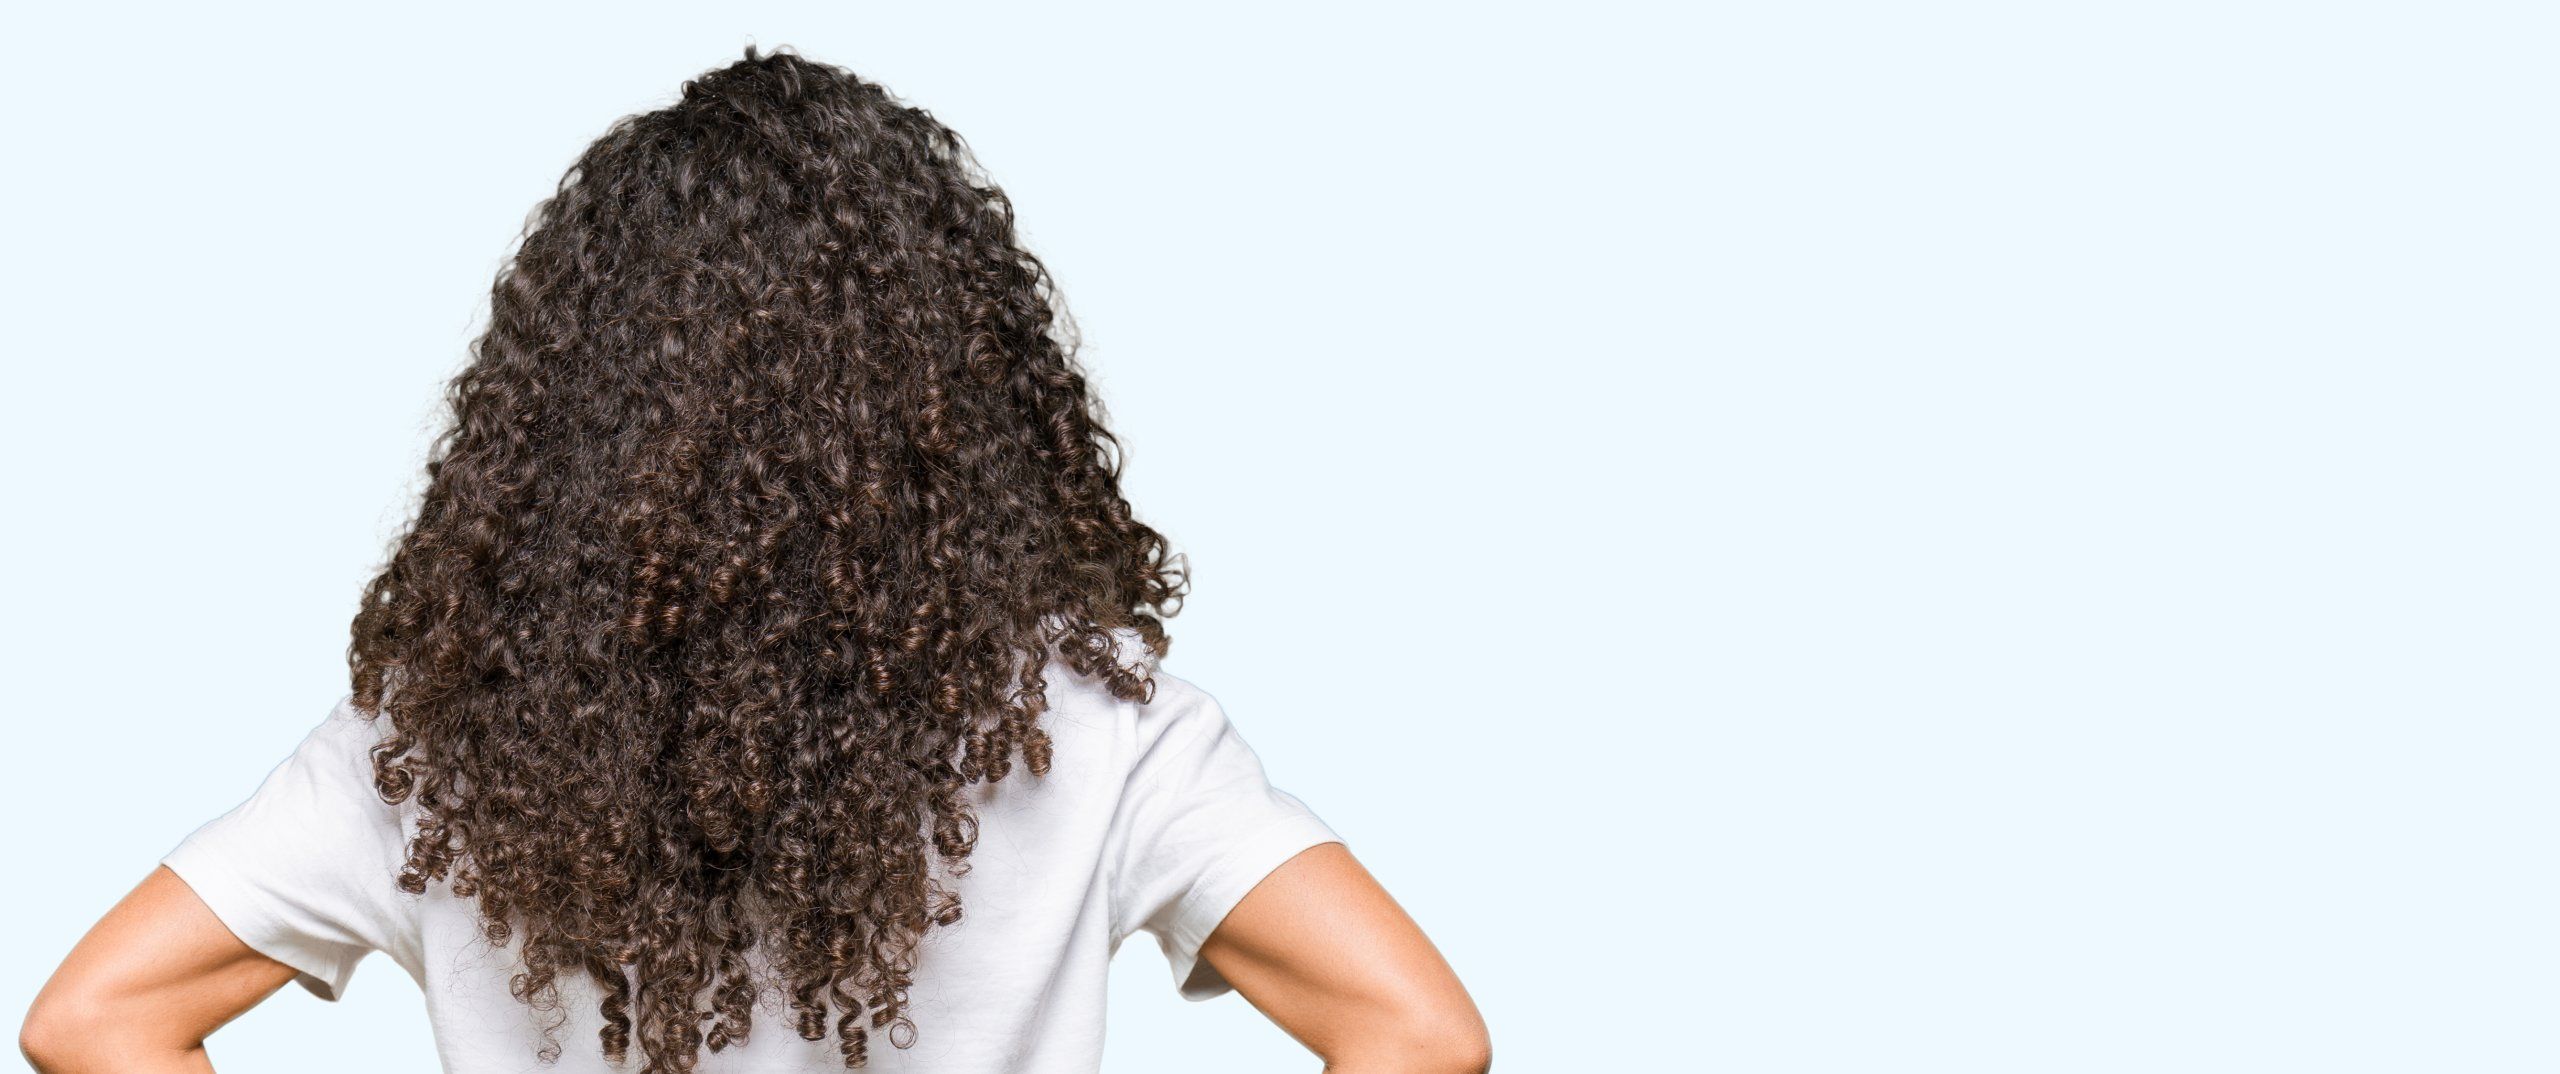 Brushed Aside: Racial Based Hair Discrimination